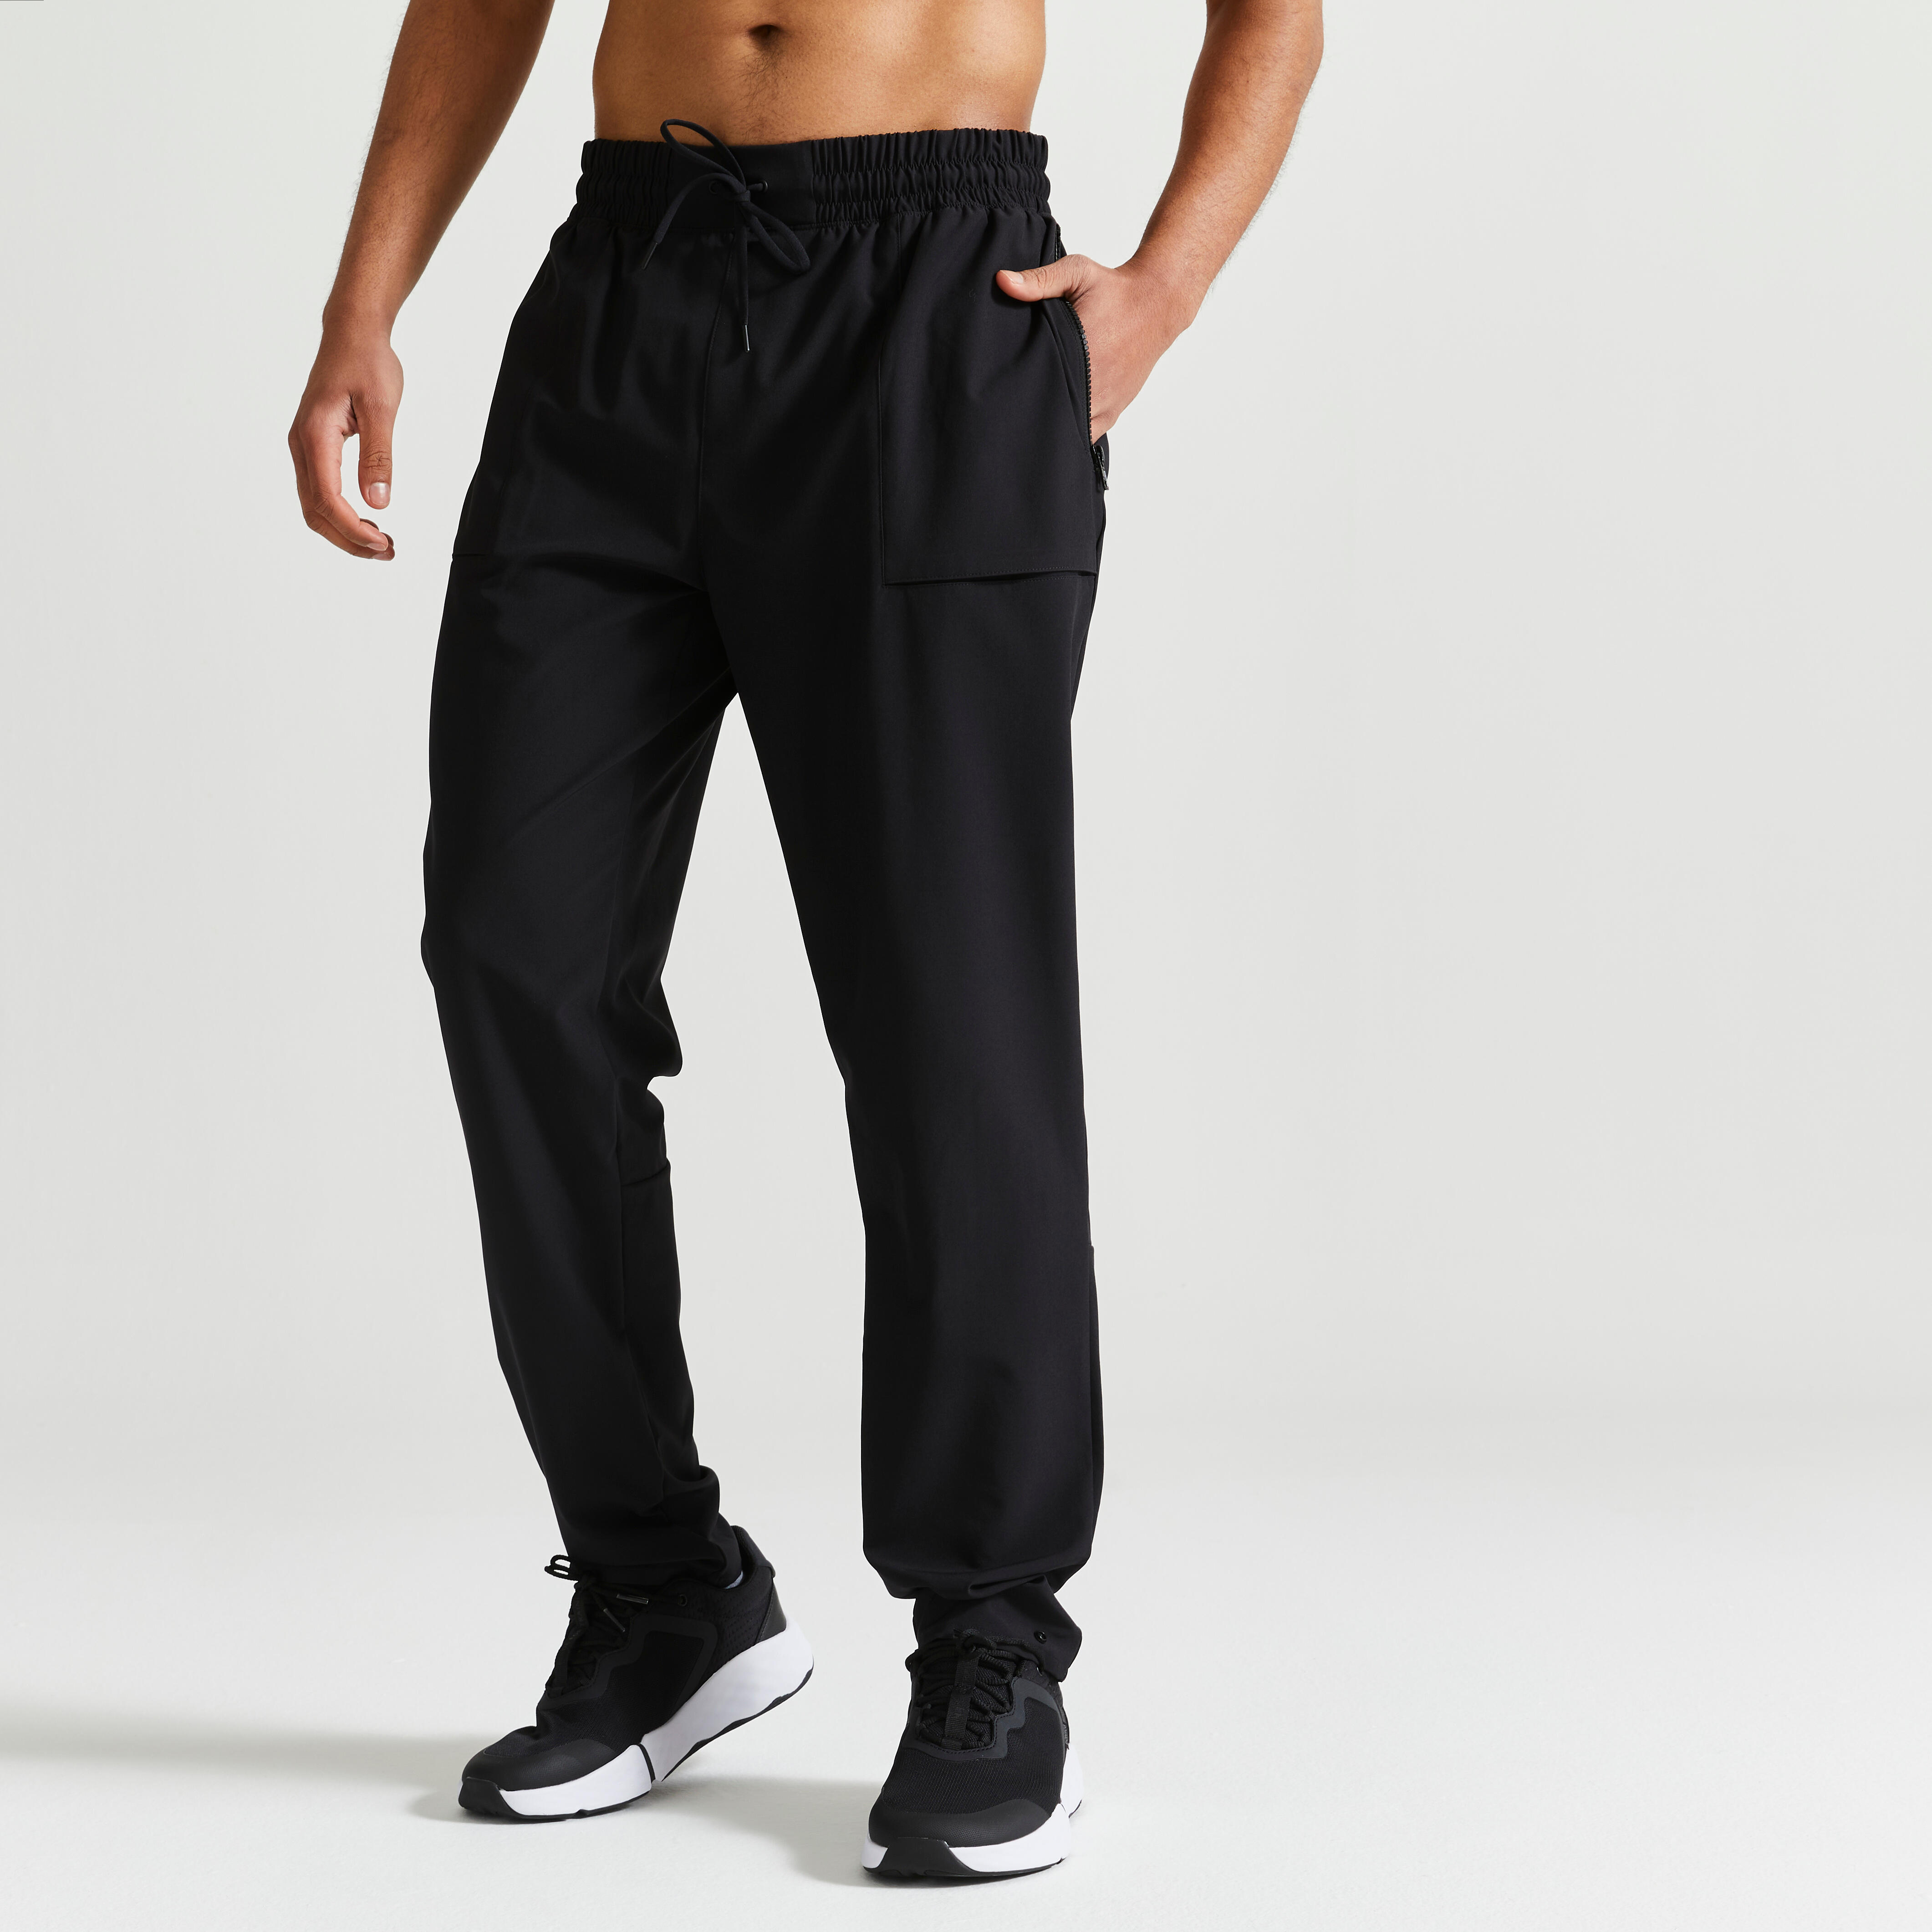 Men's Warm Fitness Pants - 100 Black - Black - Domyos - Decathlon